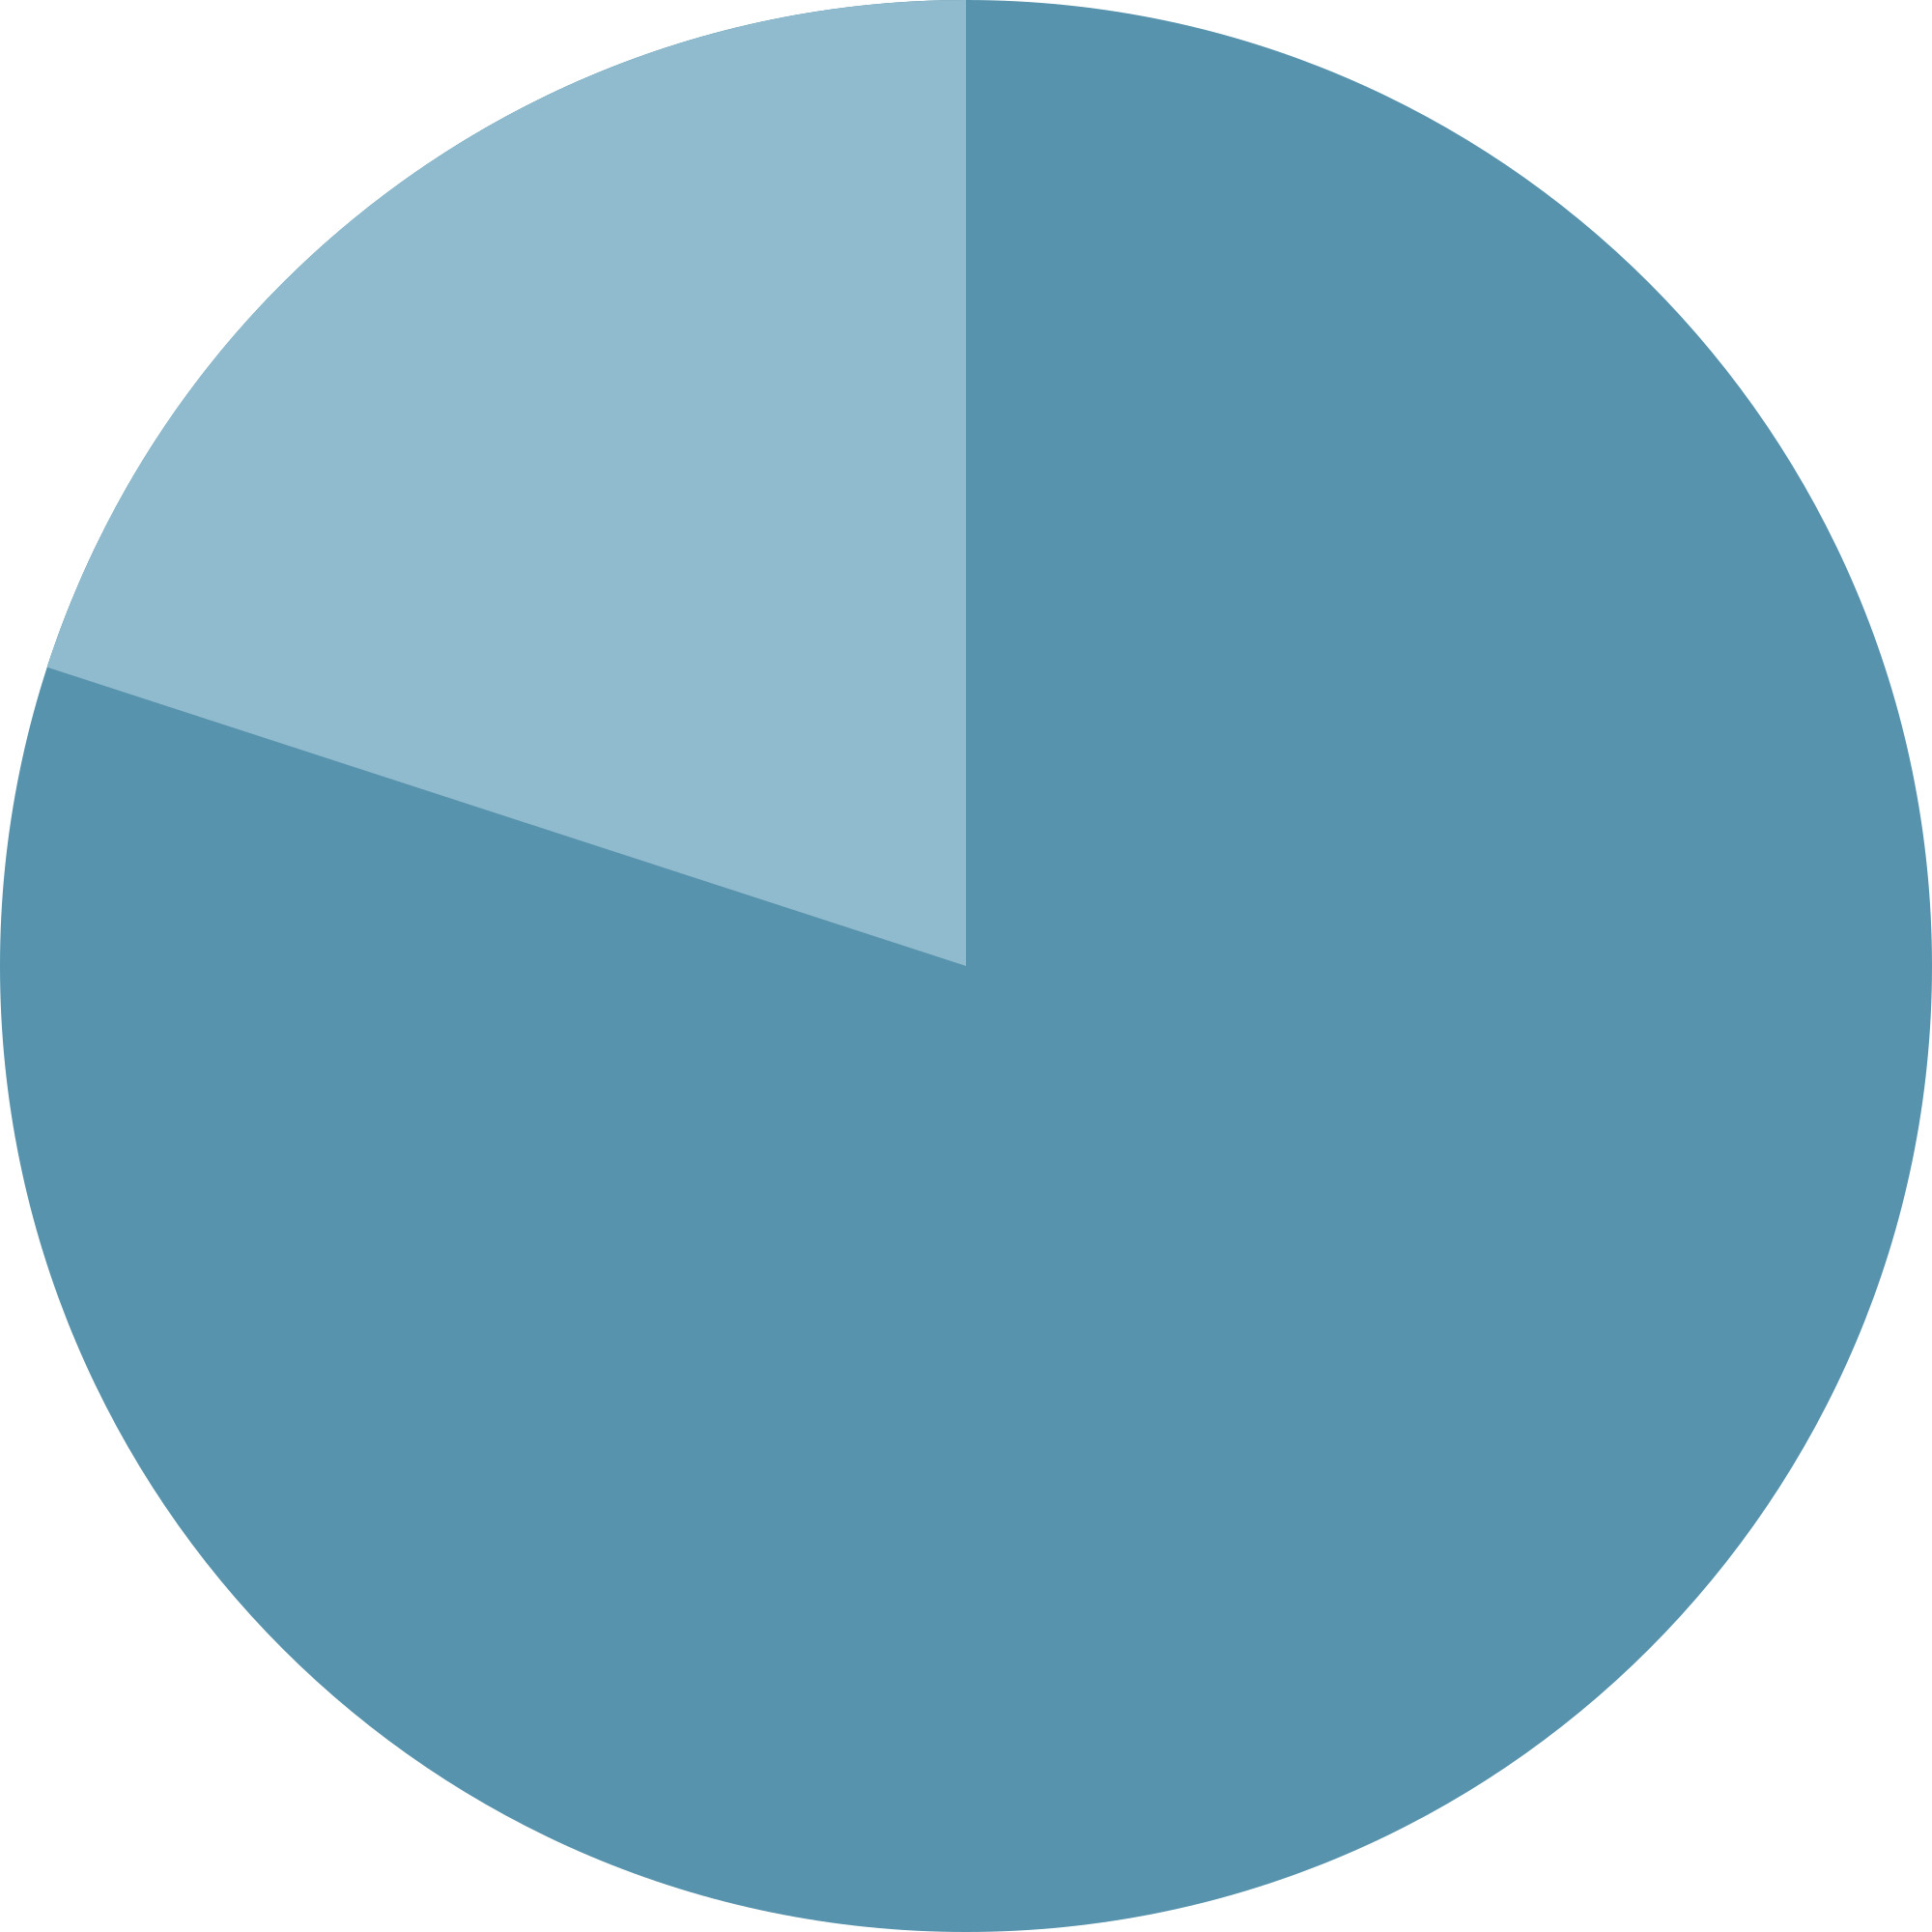 80% Pie Chart icons